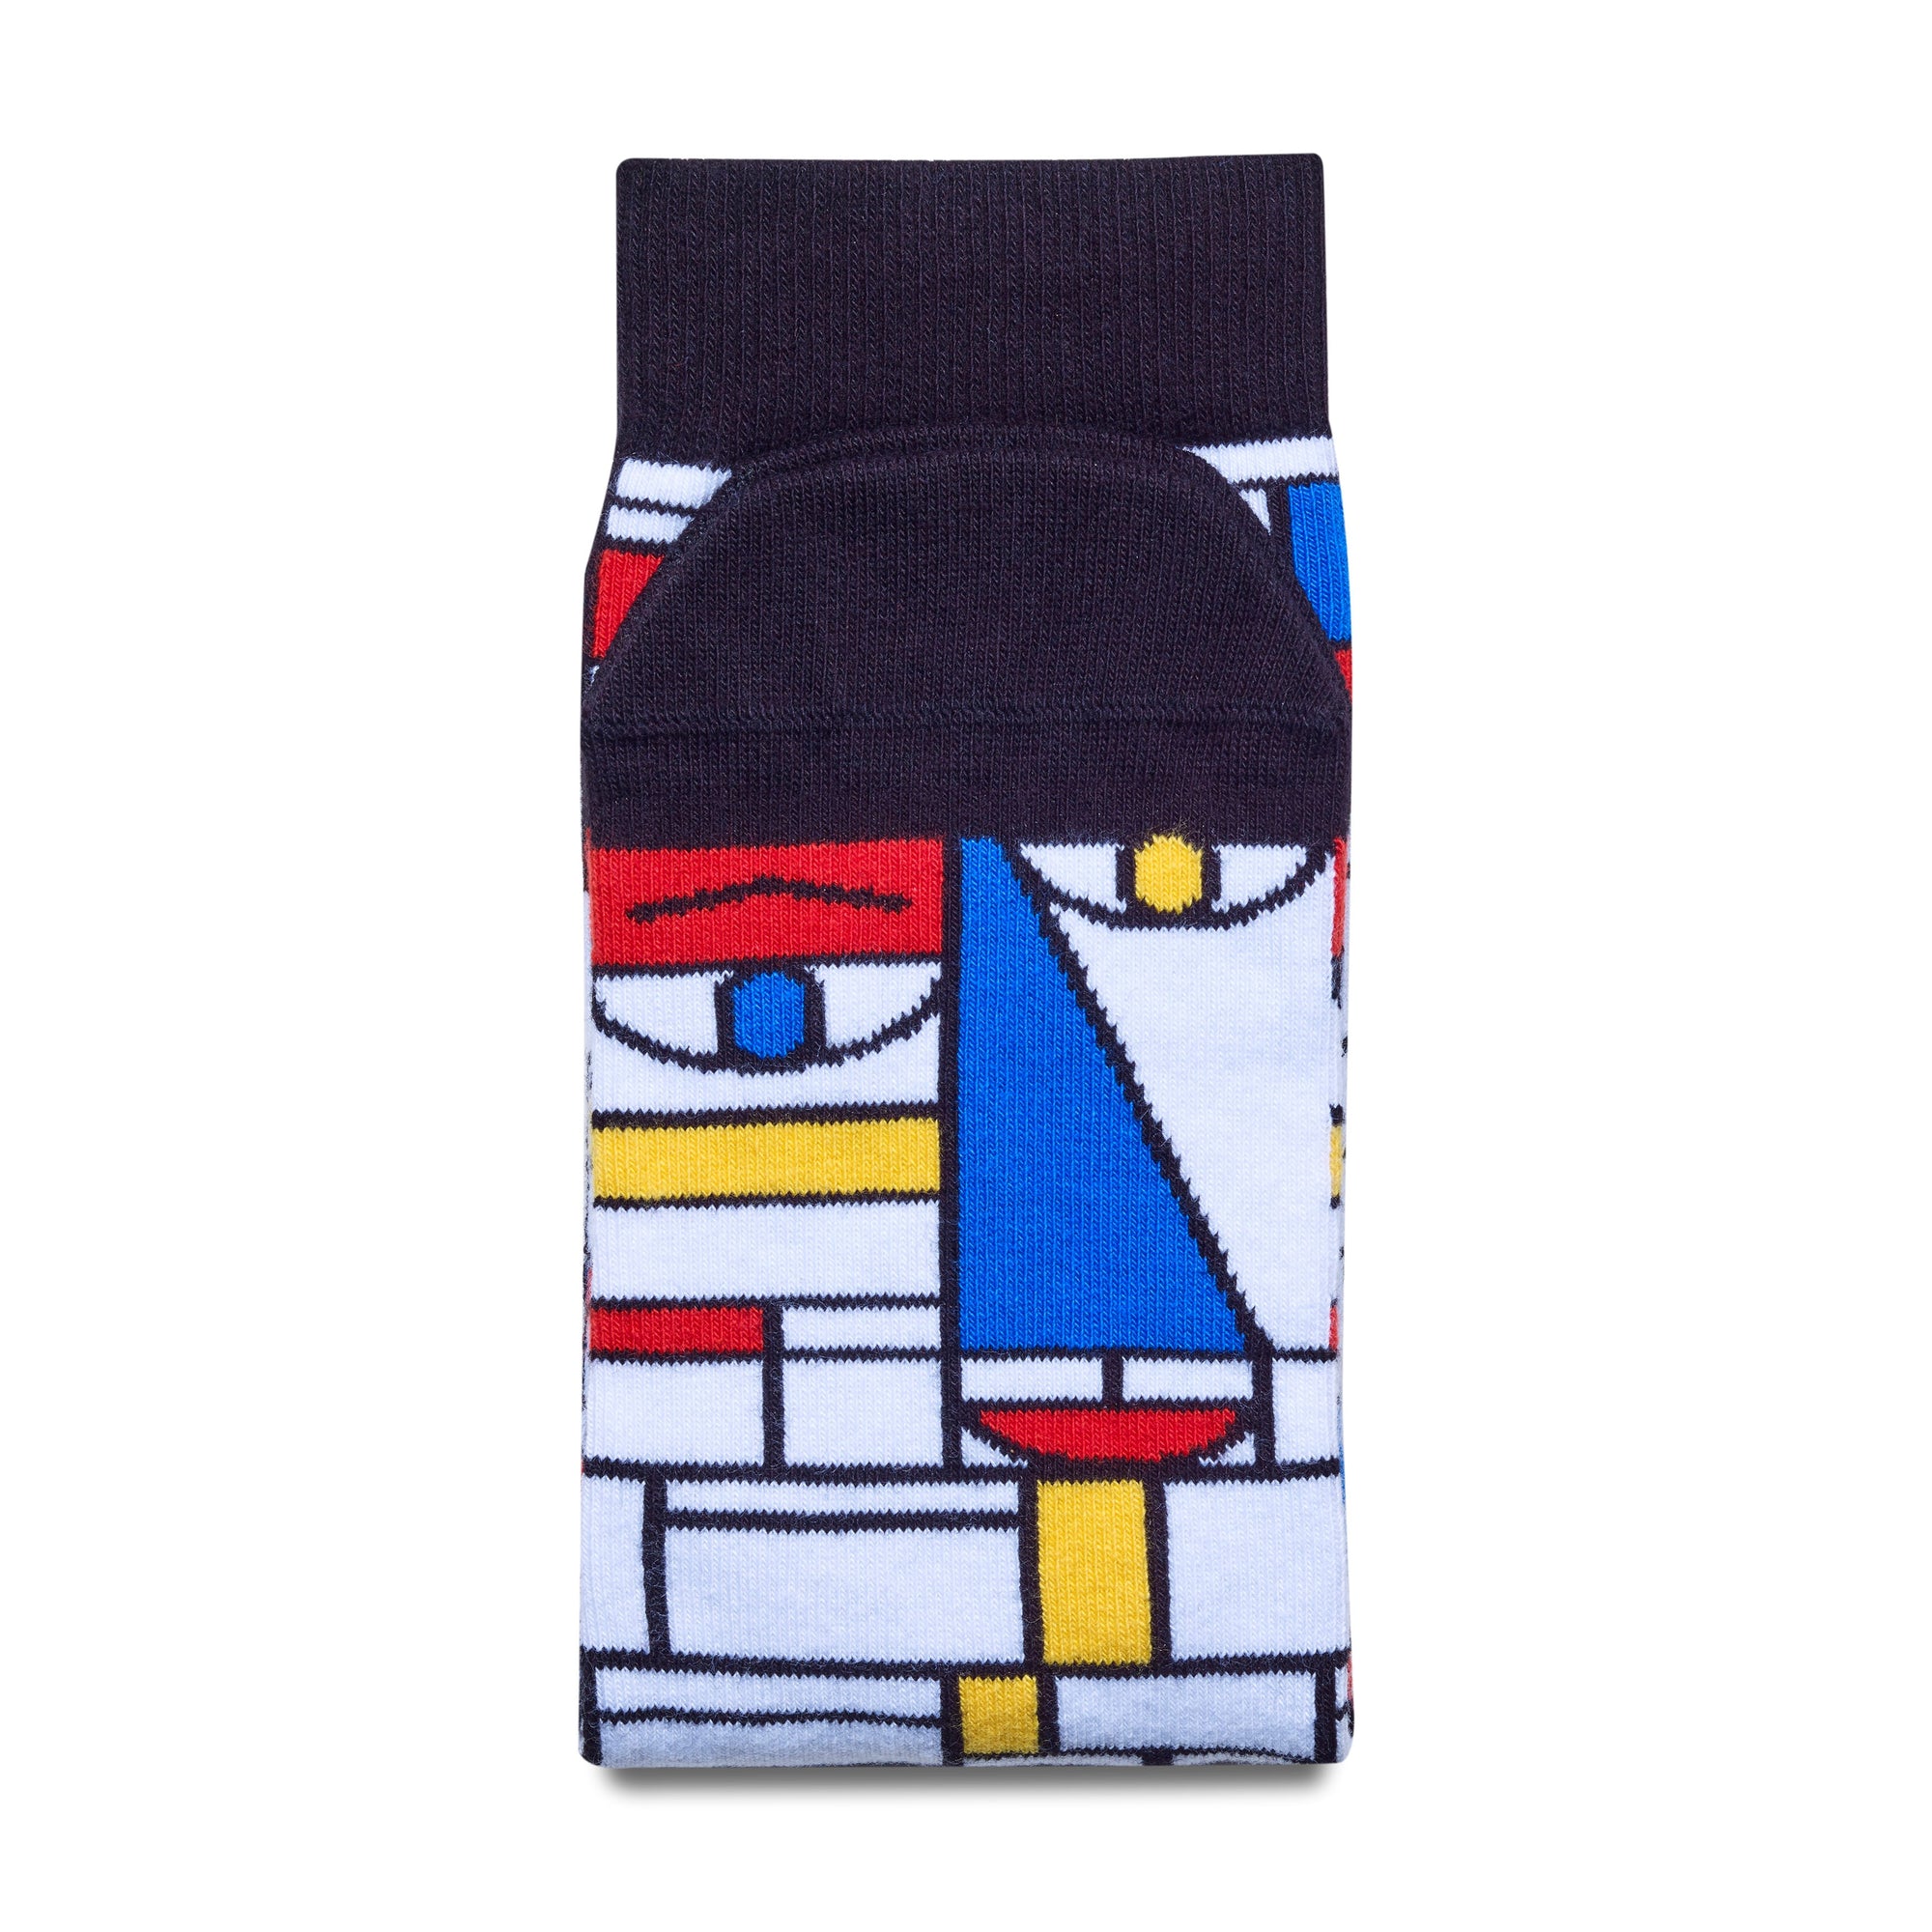 Chattyfeet Feet Mondrian Socks